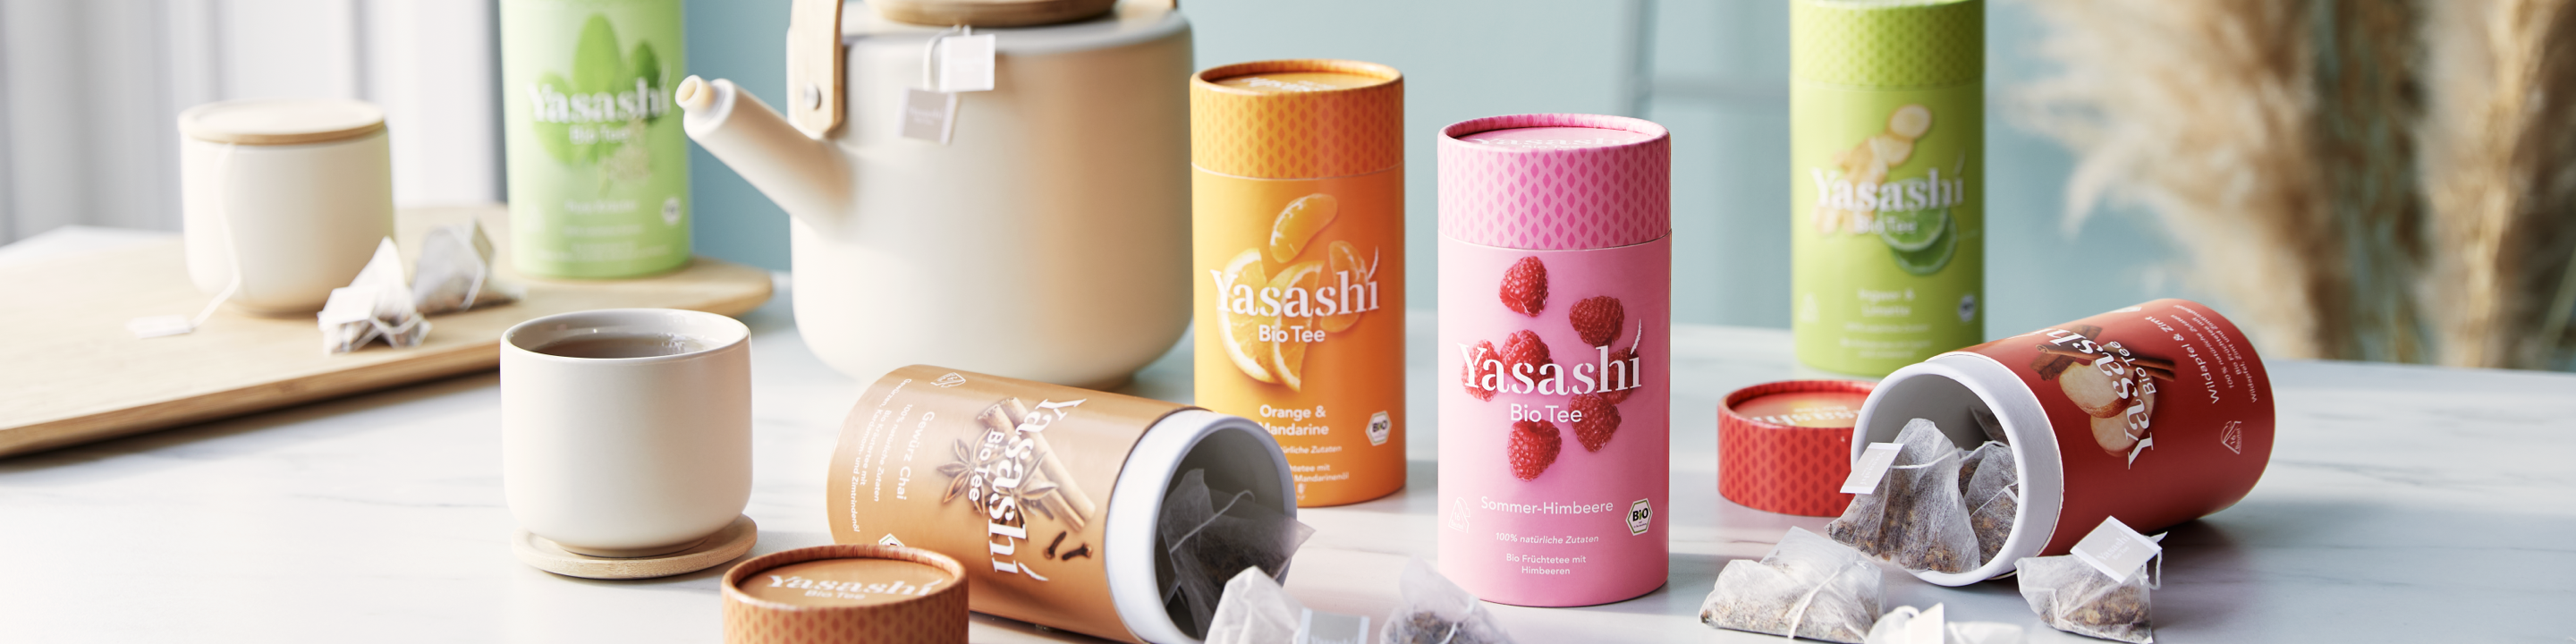 Yasashi-Produktrange